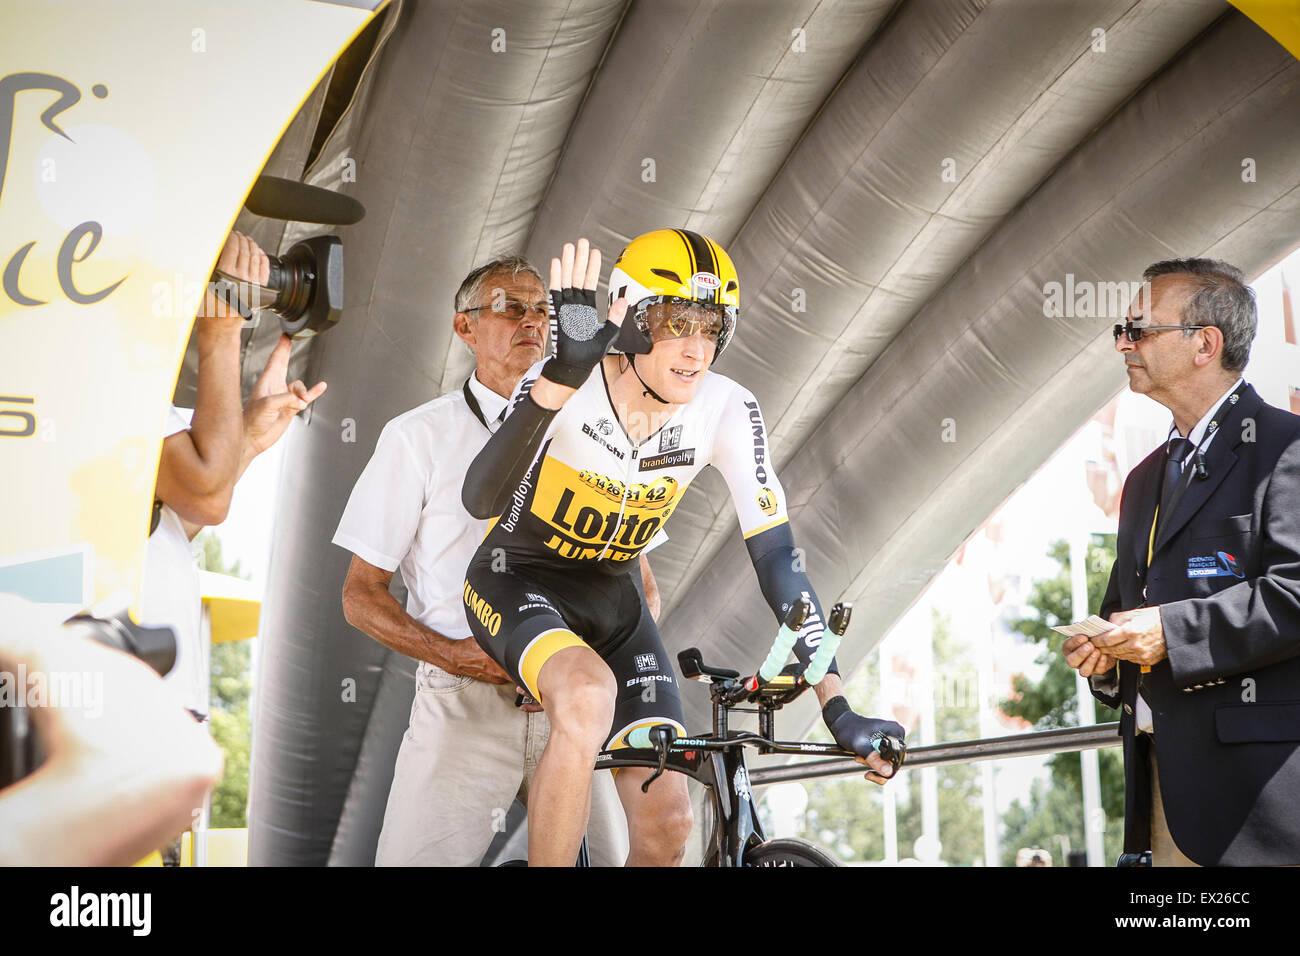 Utrecht, Paesi Bassi. 4 Luglio, 2015. Tour de France Time Trial Stage, Robert GESINK, Team Lotto Jumbo Credito: Jan de Wild/Alamy Live News Foto Stock